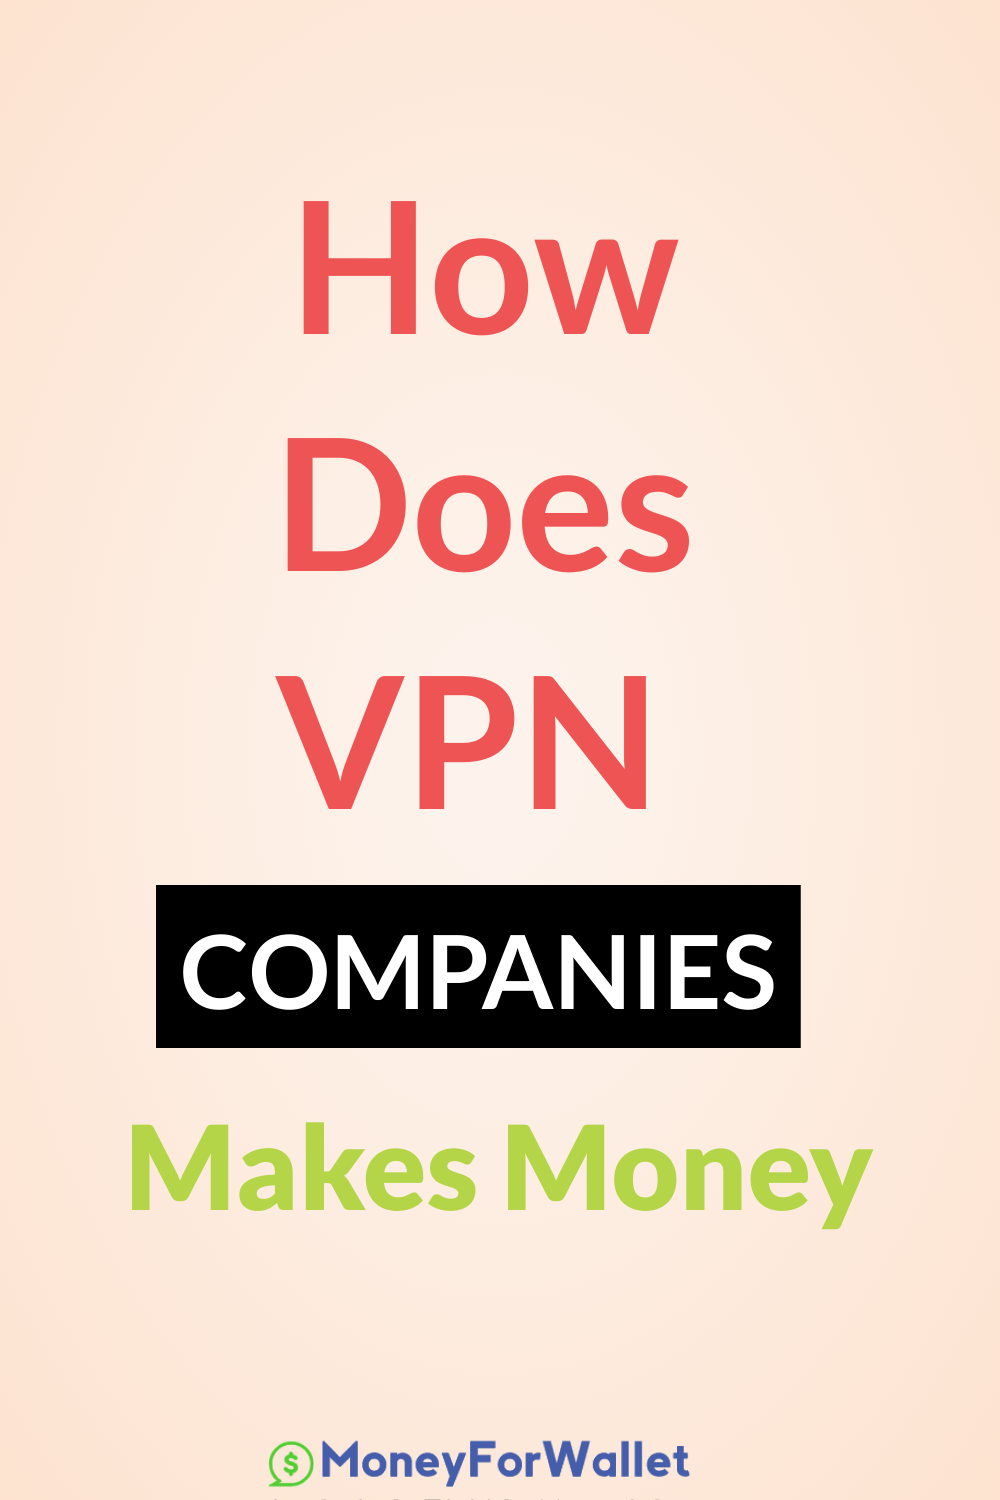 VPNs Make Money